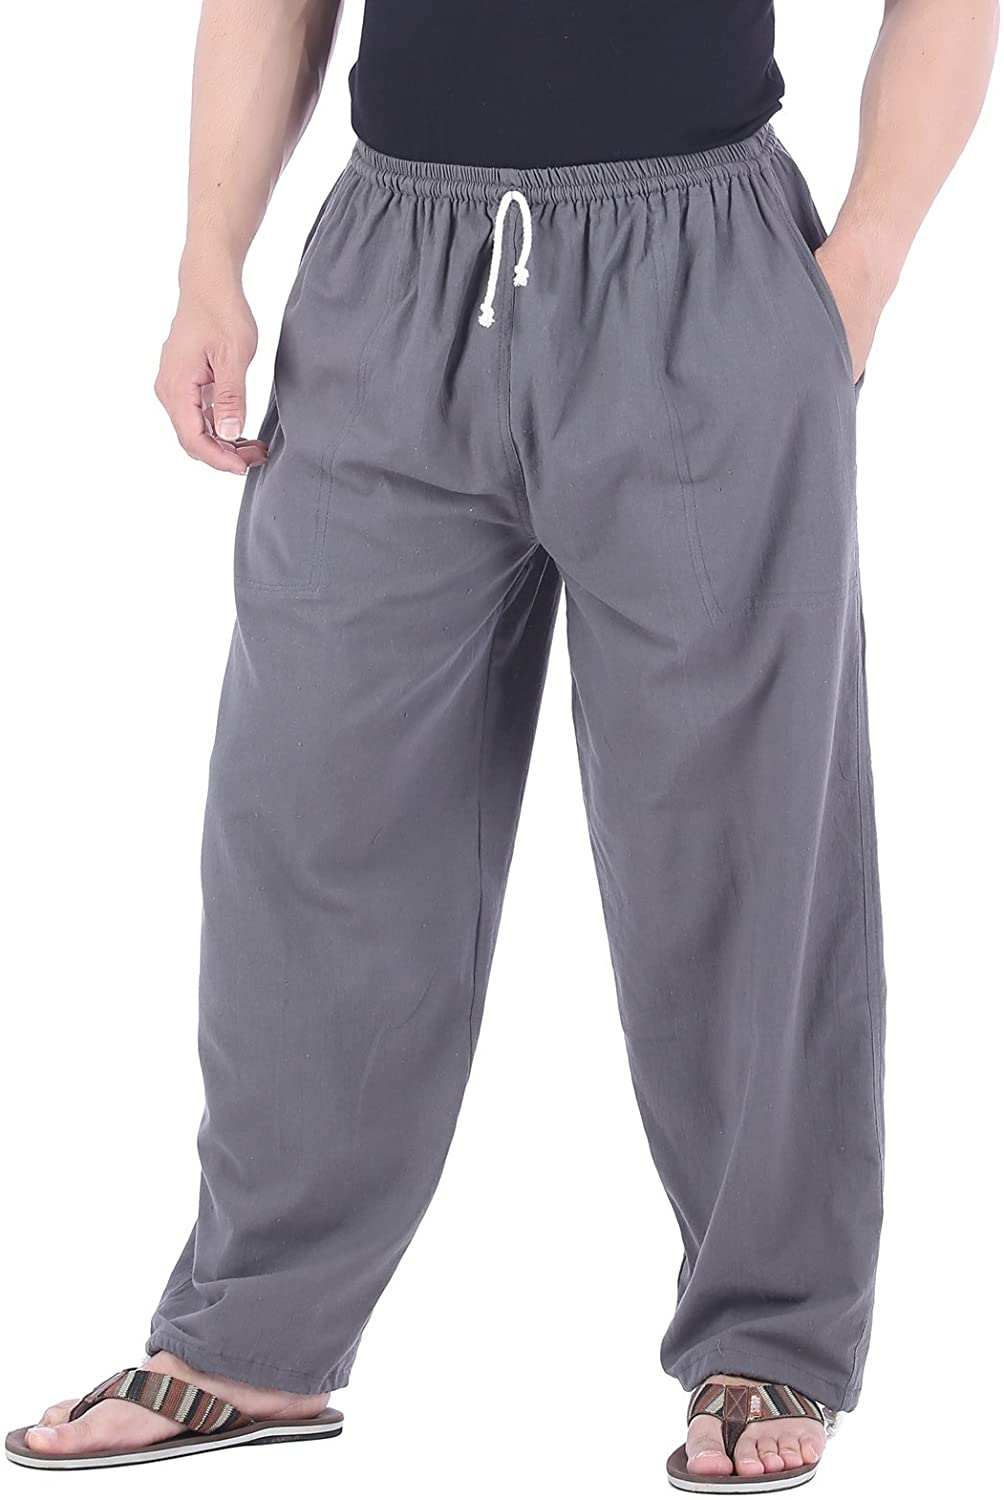 CandyHusky Mens Elastic Waist Casual Lounge Pajama Jogger Yoga Pants Cotton